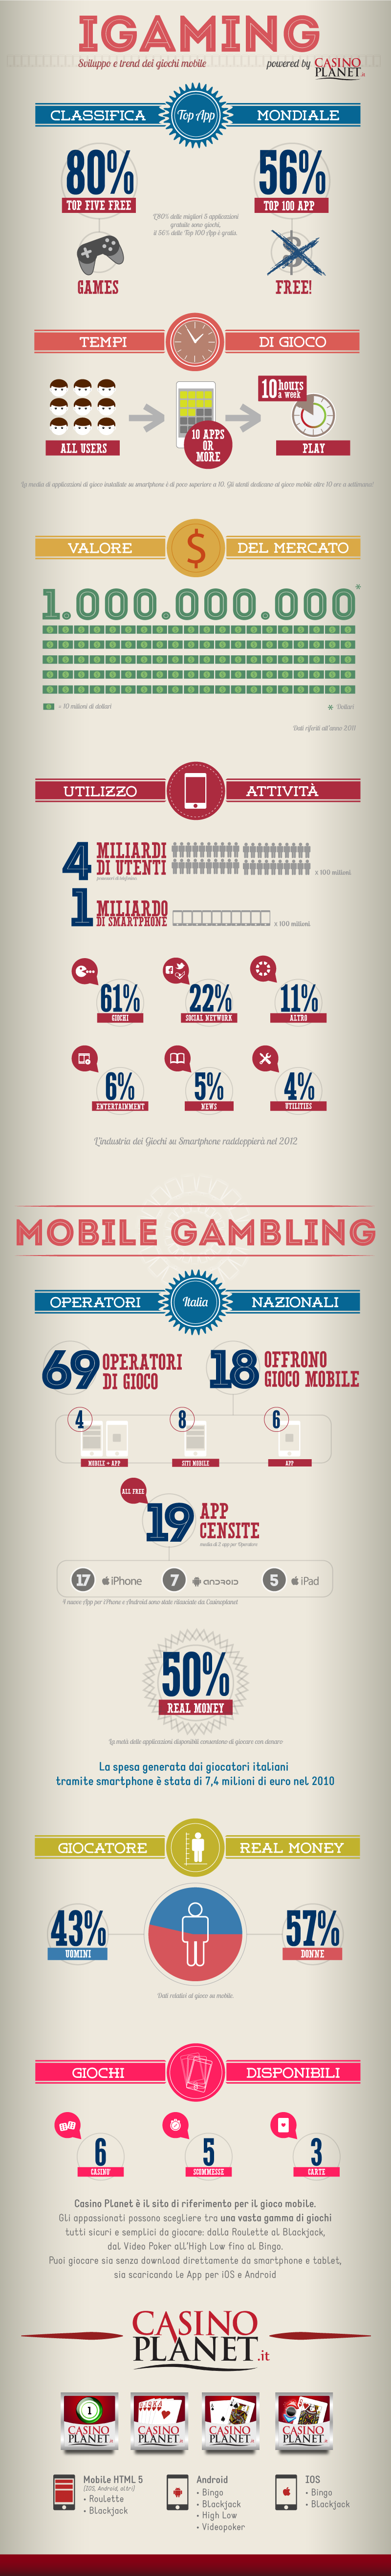 infographic  infografica game Gaming gambling casino planet casino planet